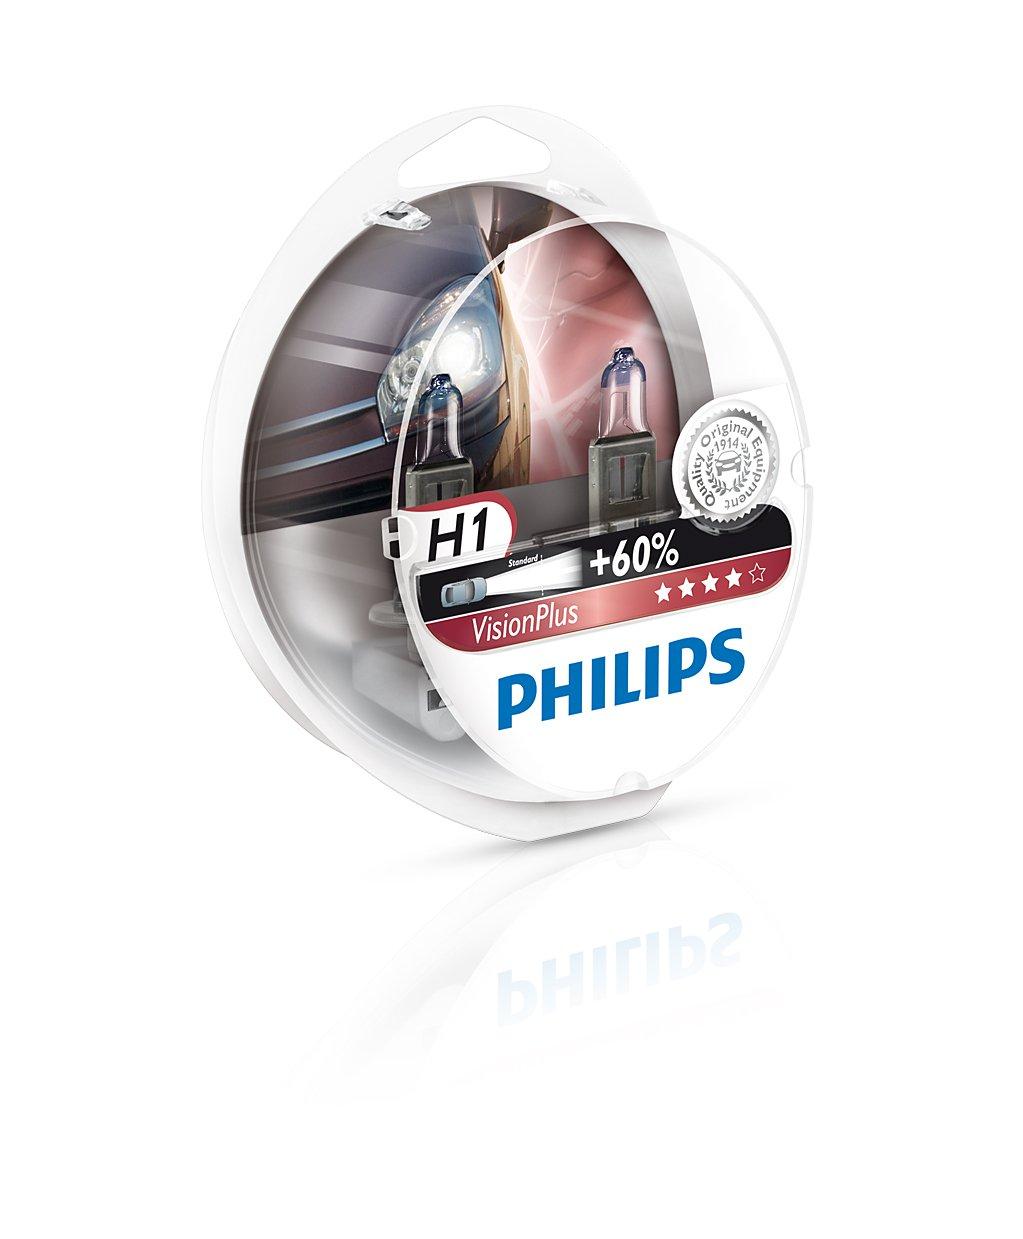 2017-09-13 PHILIPS H1 12V 55W P14,5s VisionPlus Reflektorowa żarówka halogenowa h2 VisionPlus marki Philips.